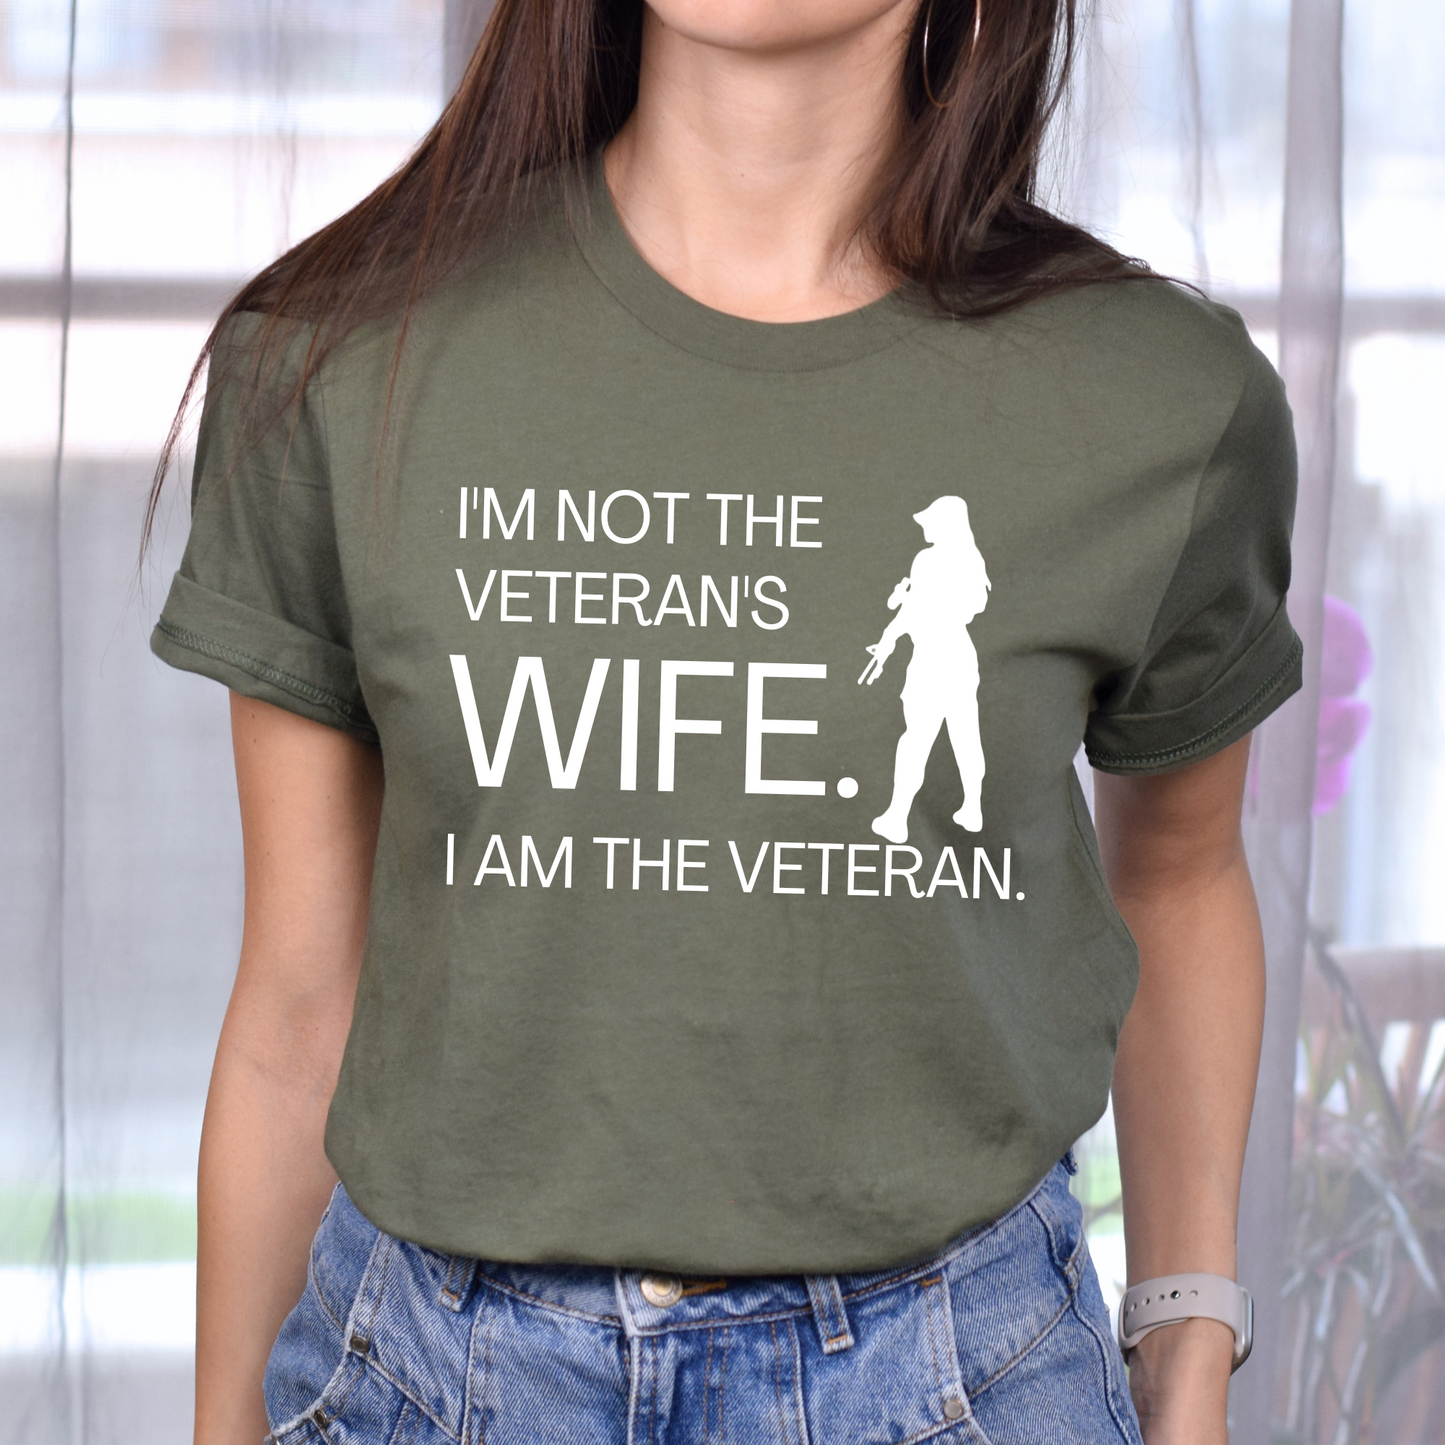 I Am the Veteran T-Shirt